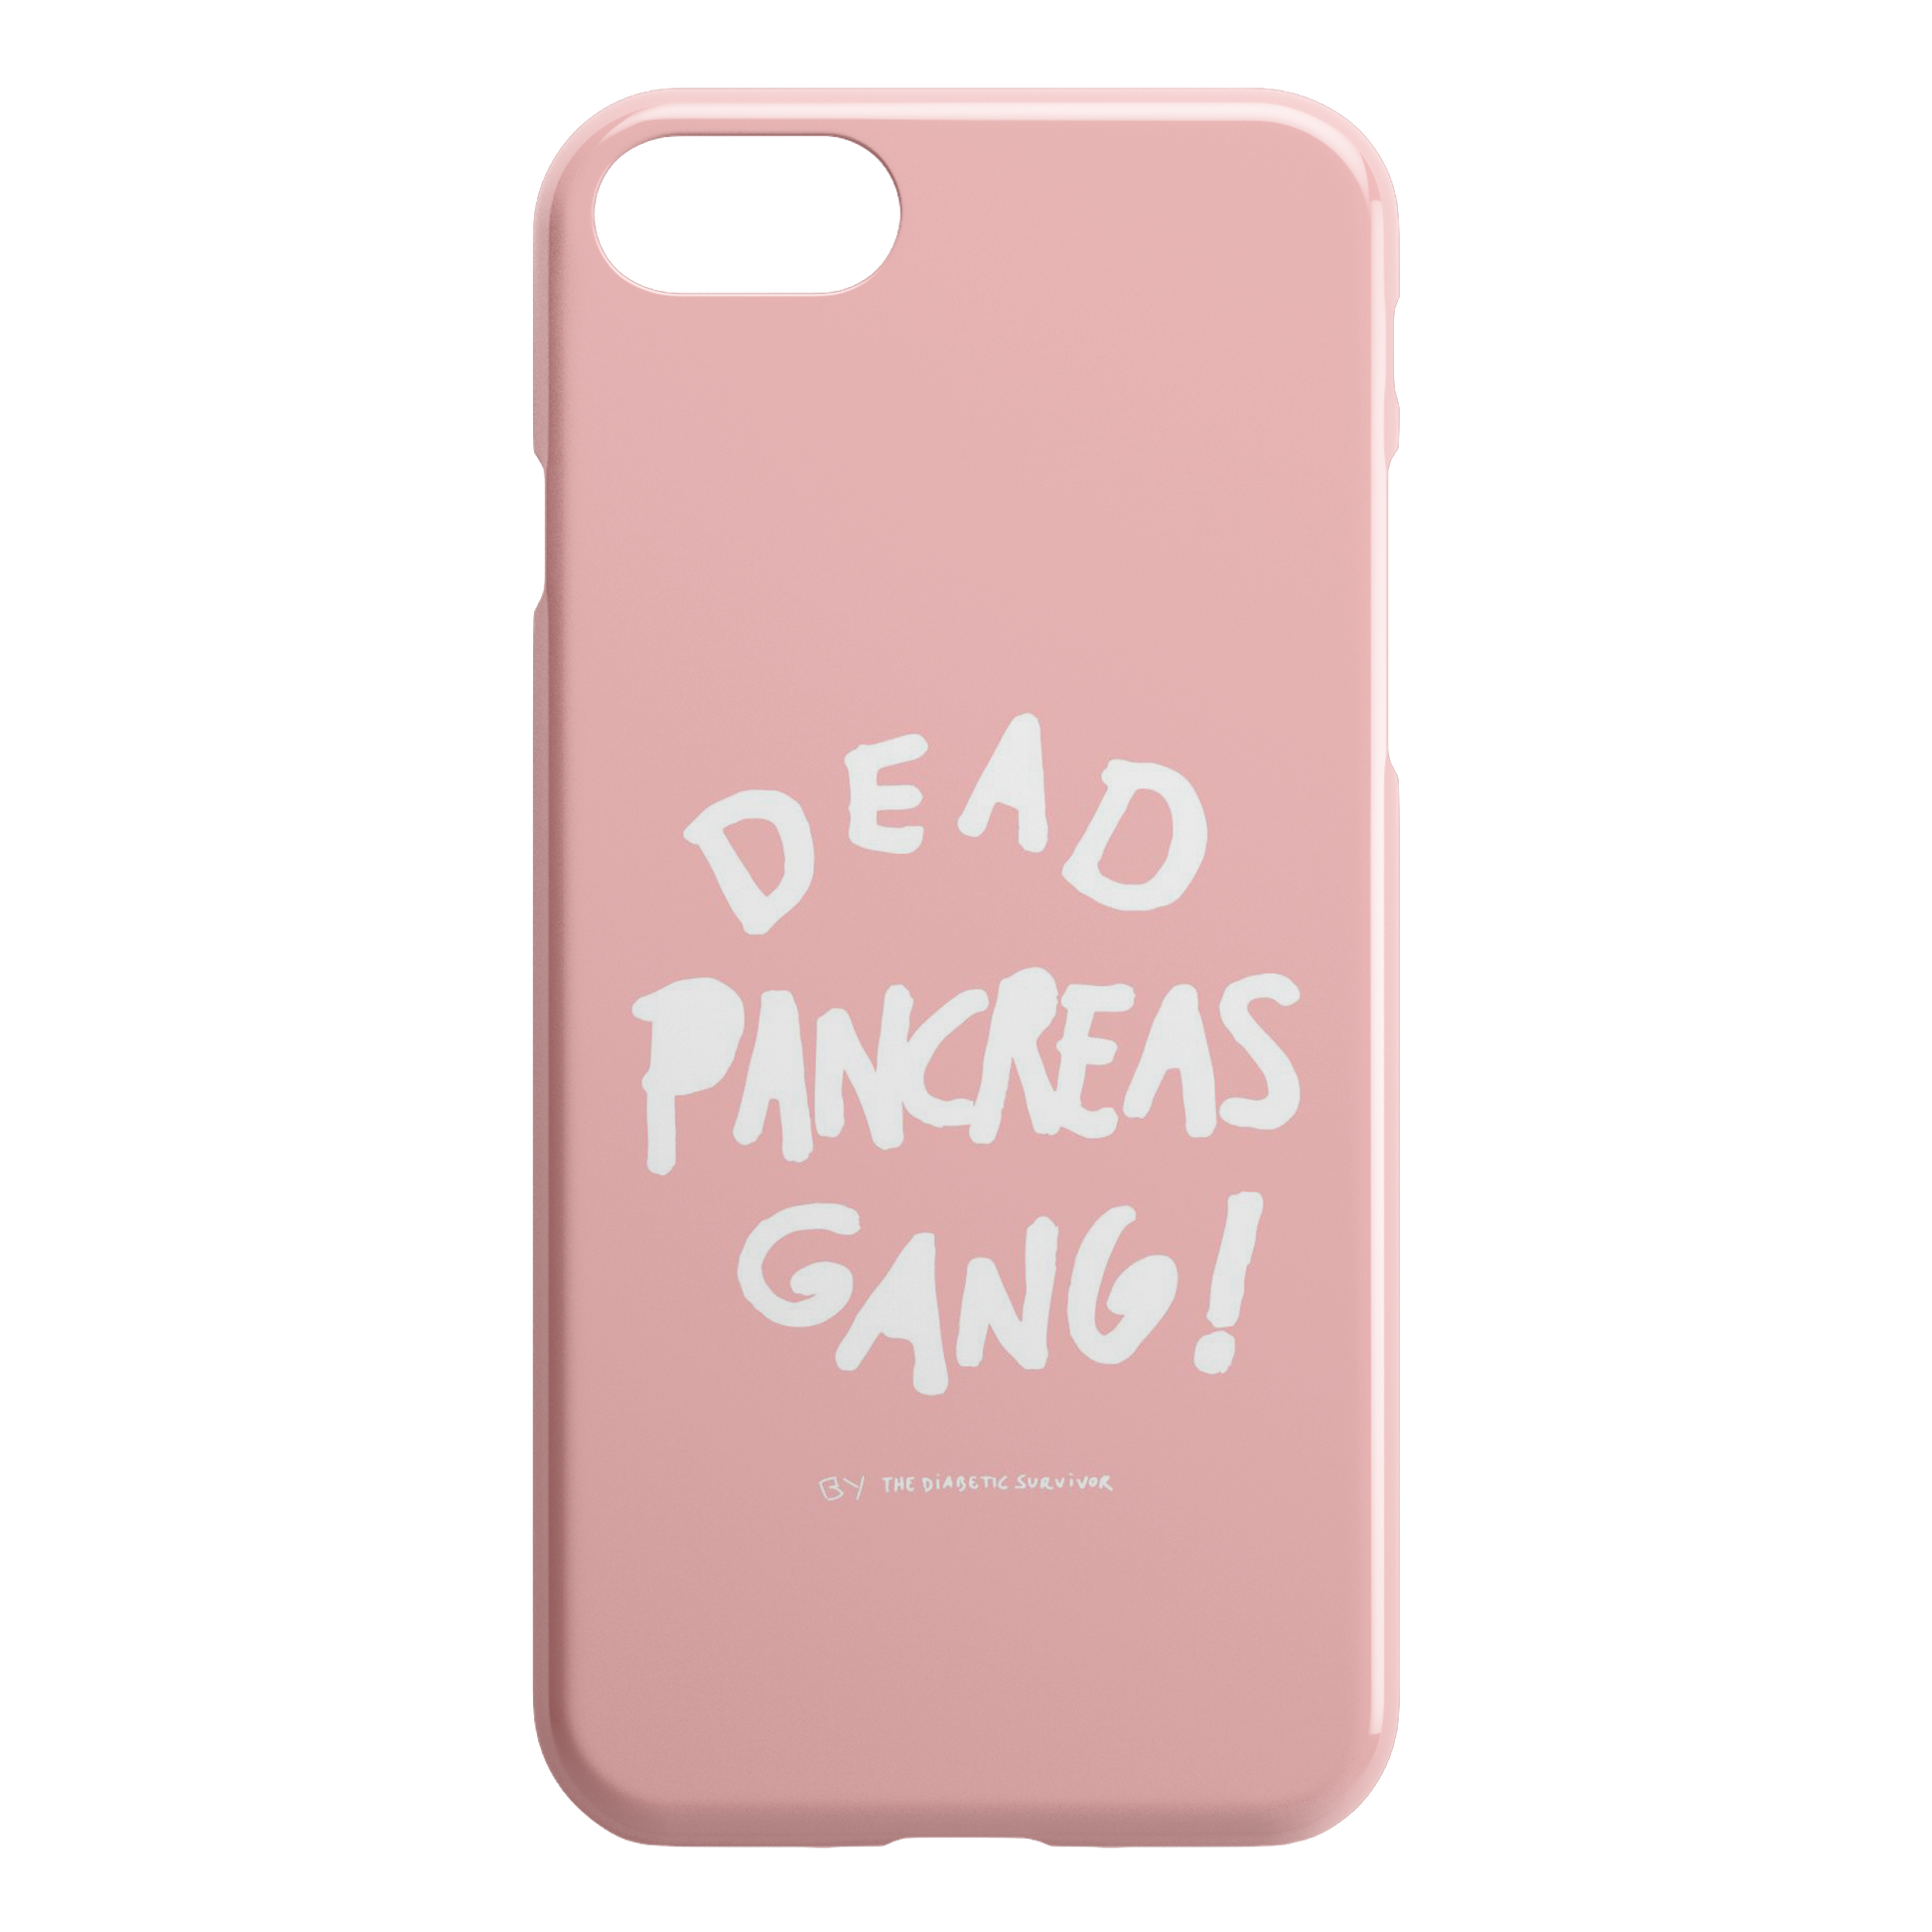 iphone case dead pancreas gang